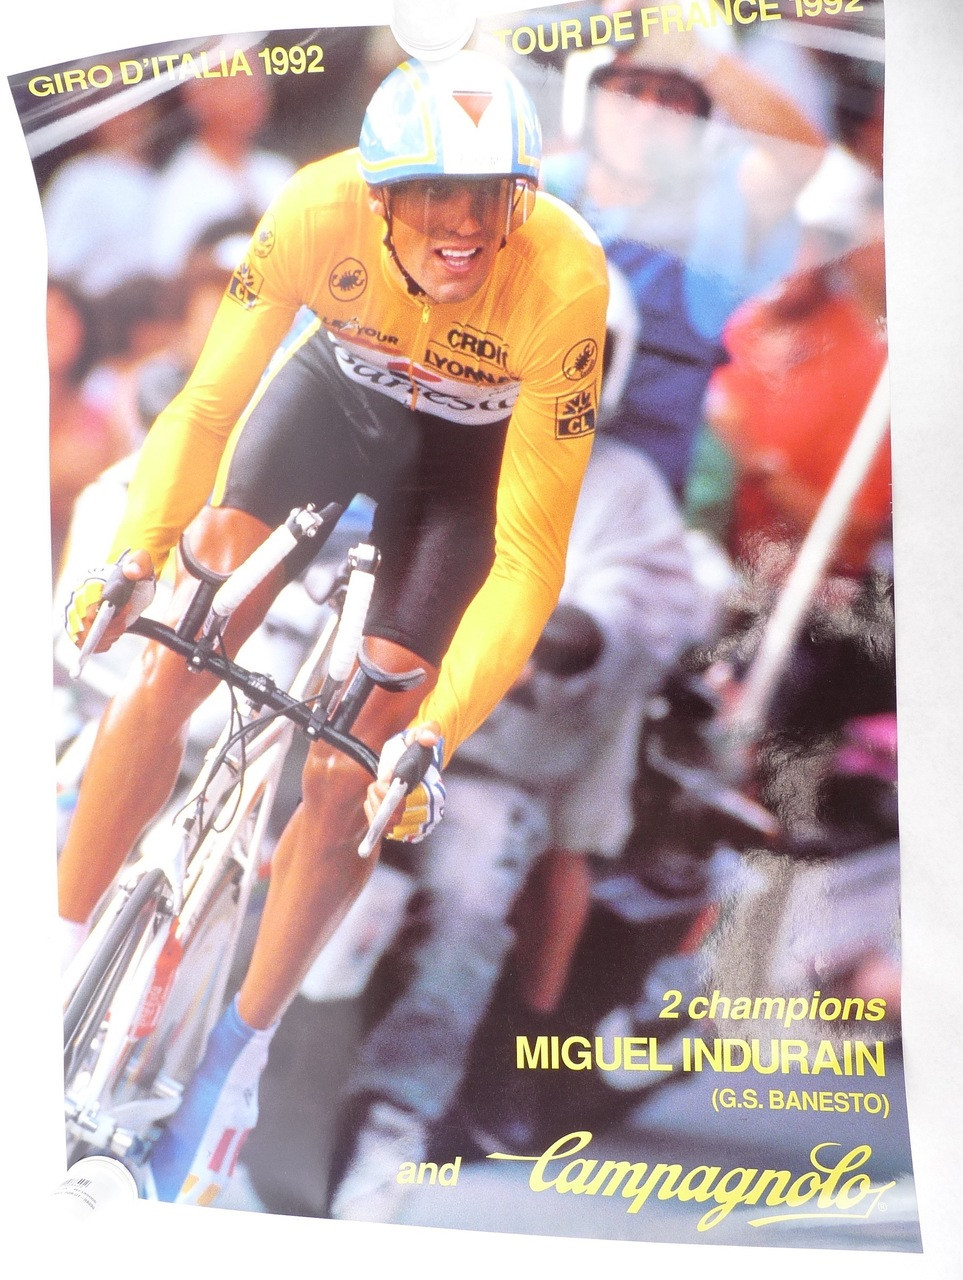 Campagnolo Miguel Indurain Poster Tour de france 